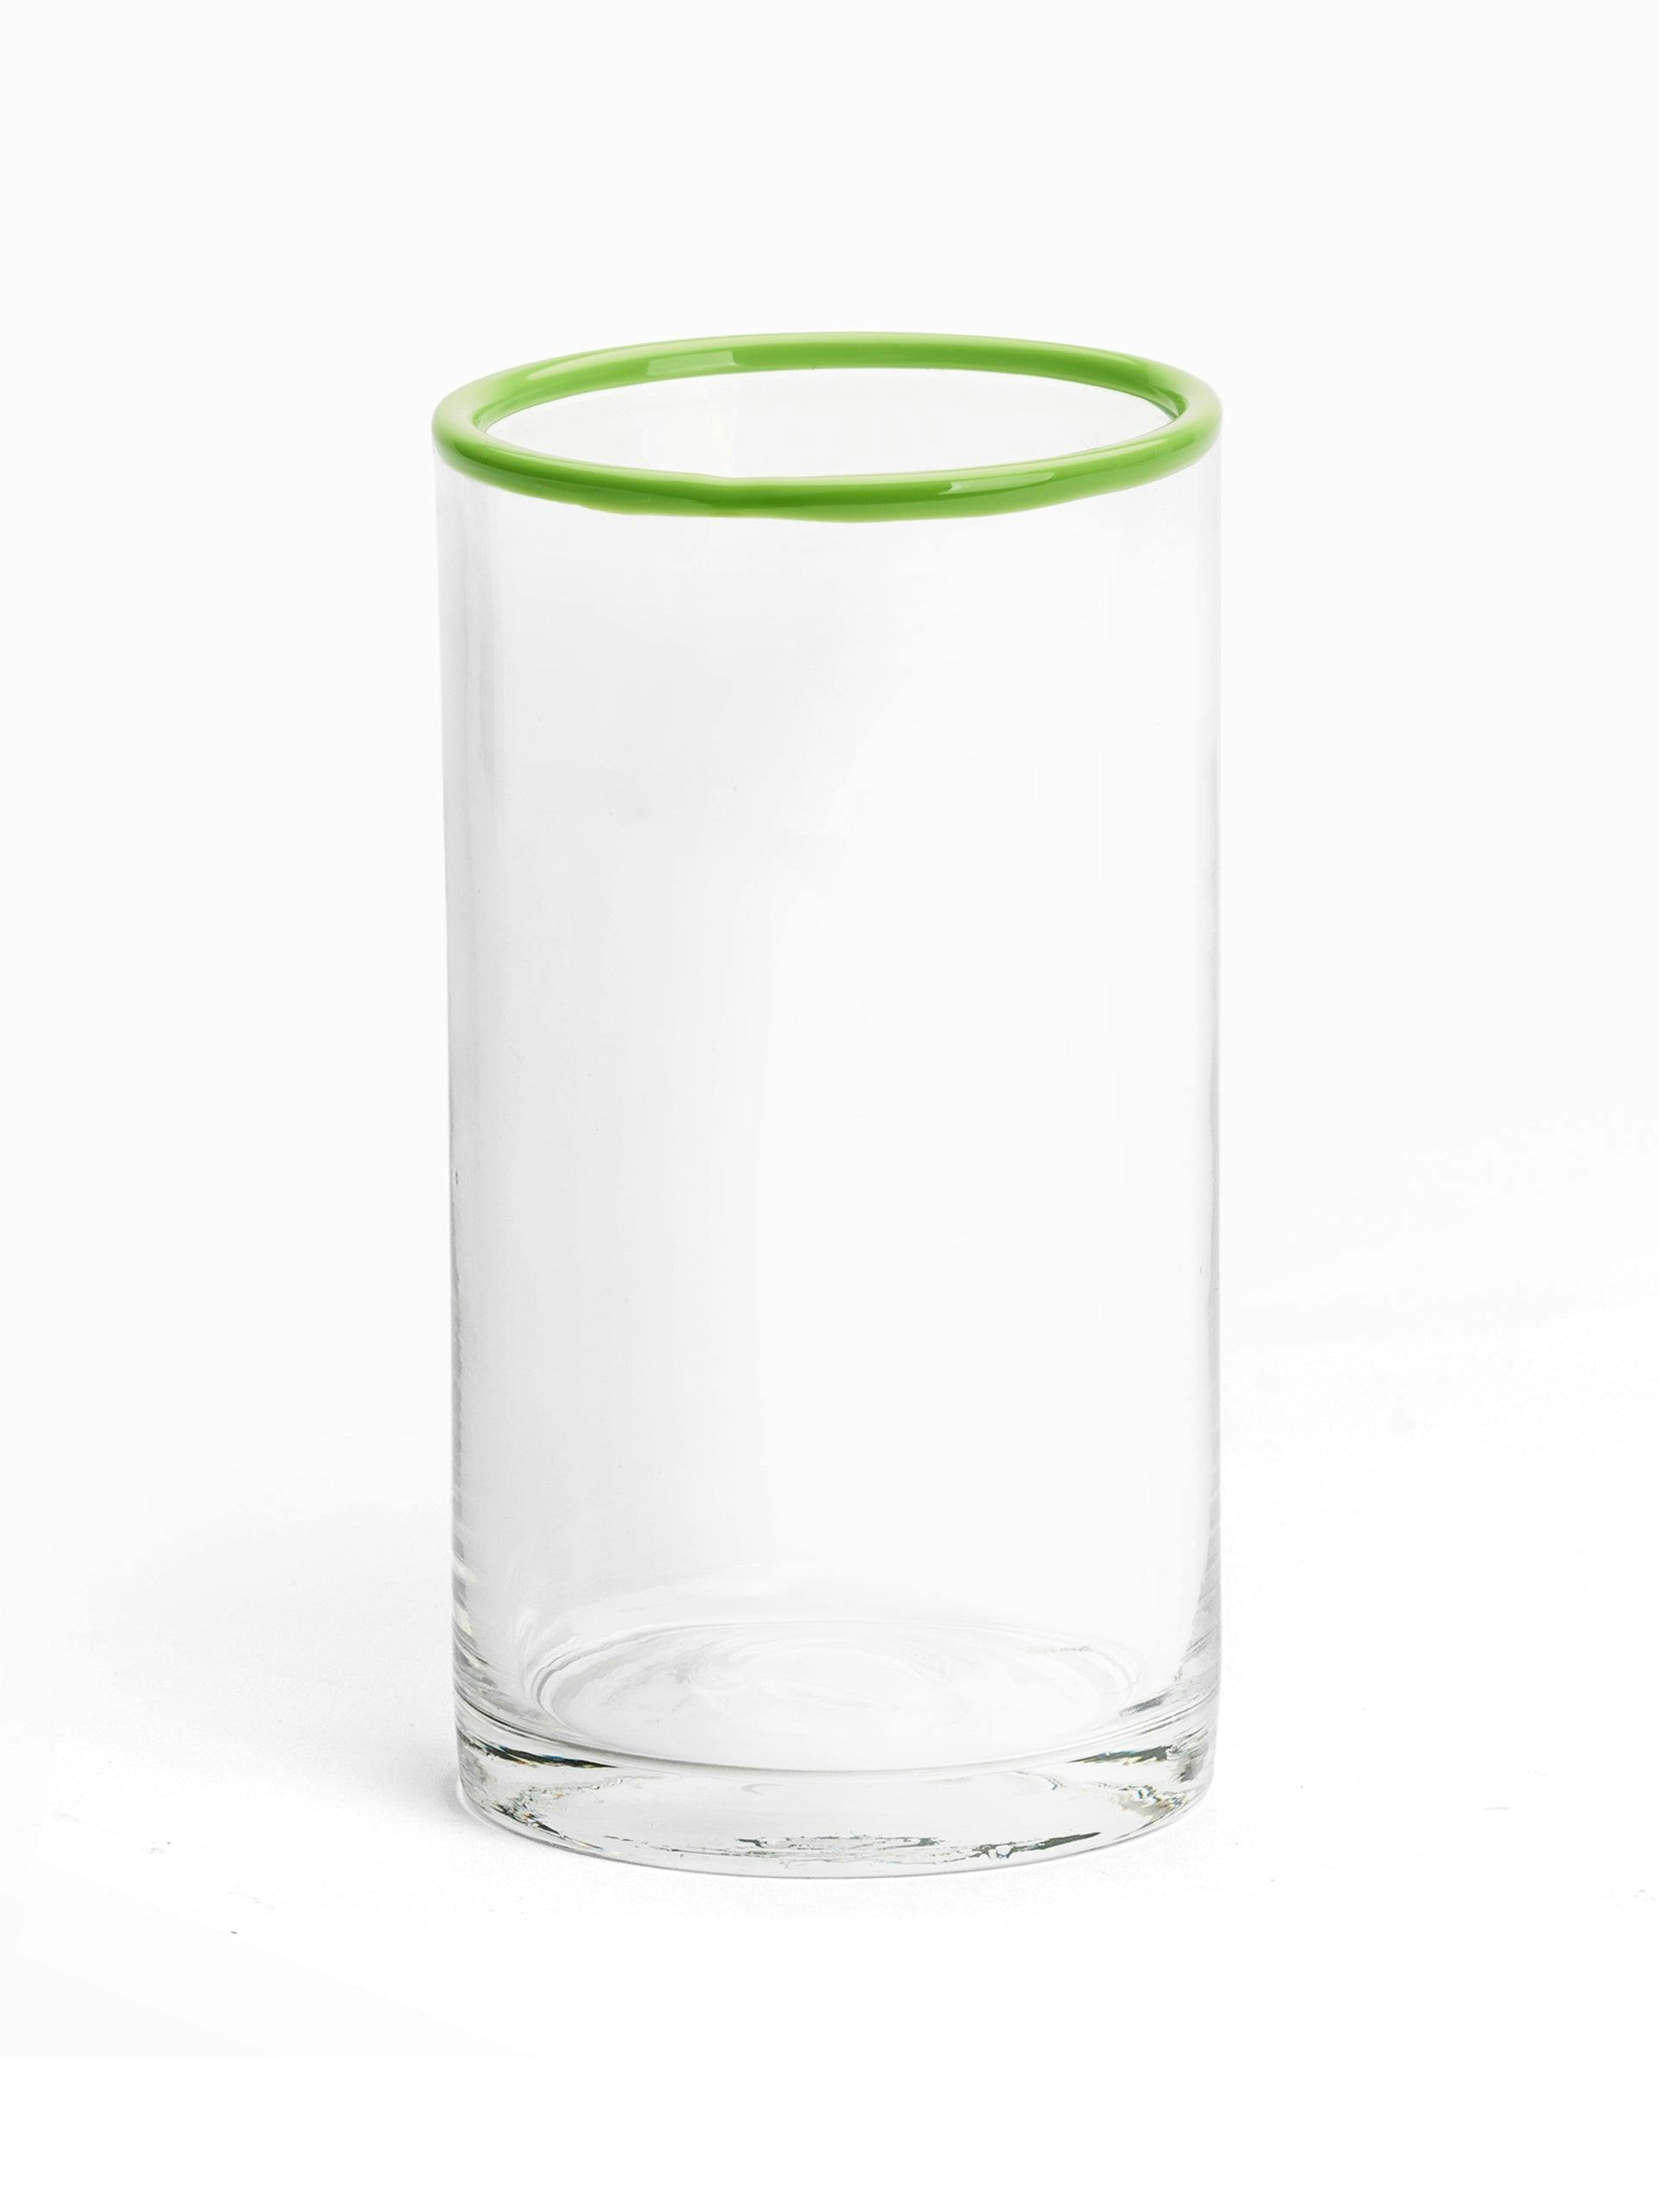 Glass hi-ball with green rim